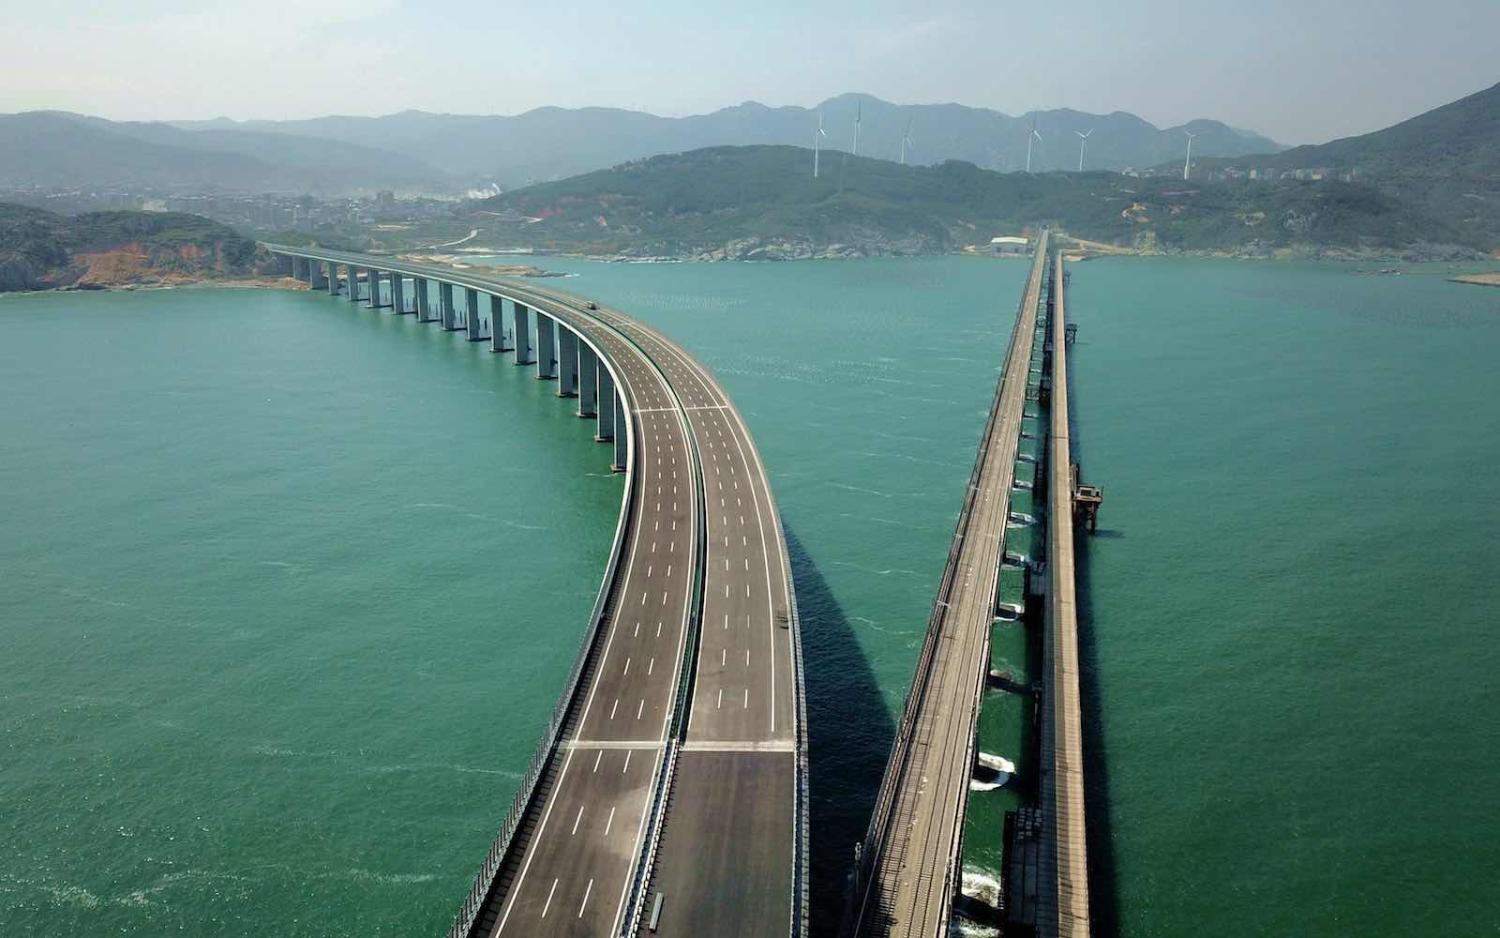 Pingtan cross-strait expressway/railway bridge under construction, Fujian province, China, 29 April (Wang Dongming/China News Service via Getty)